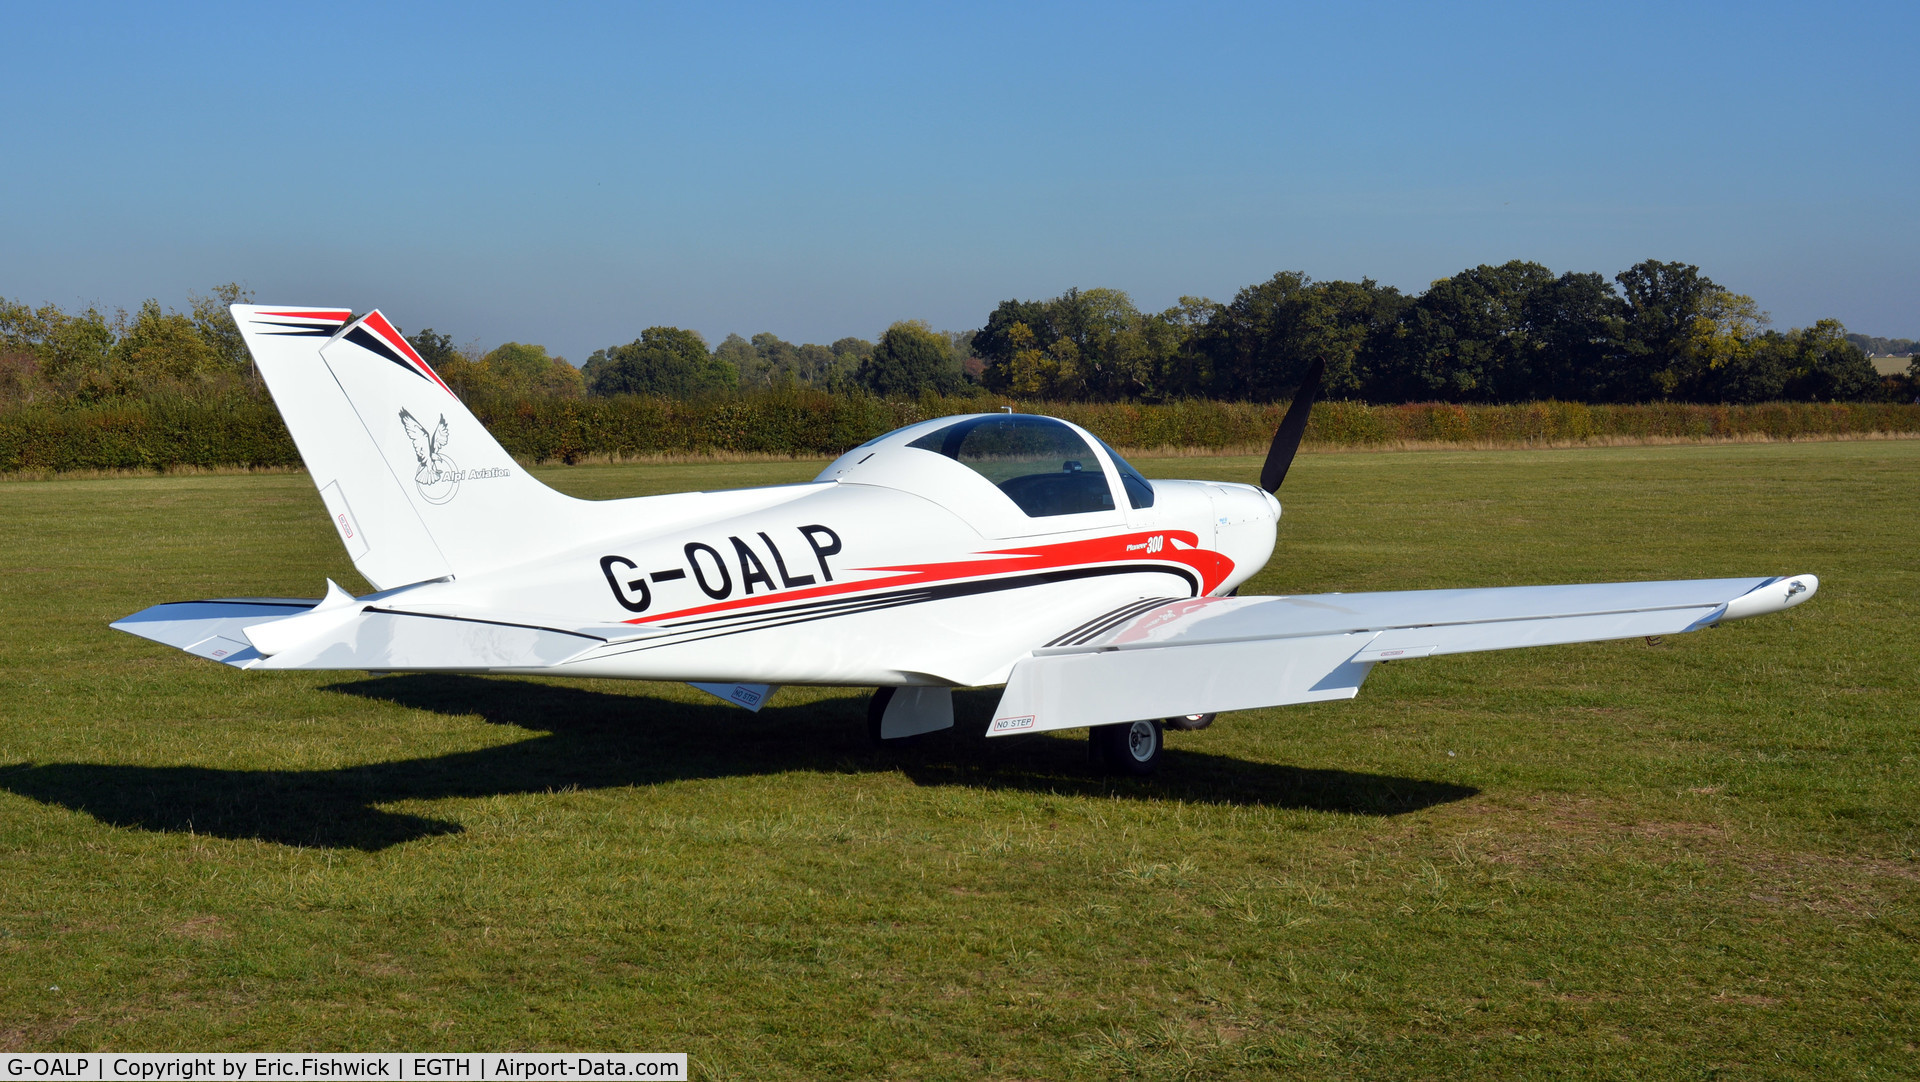 G-OALP, 2017 Alpi Aviation Pioneer 300 Hawk C/N LAA 330A-15471, 2. G-OALP at The Shuttleworth Collection, Oct. 2018.